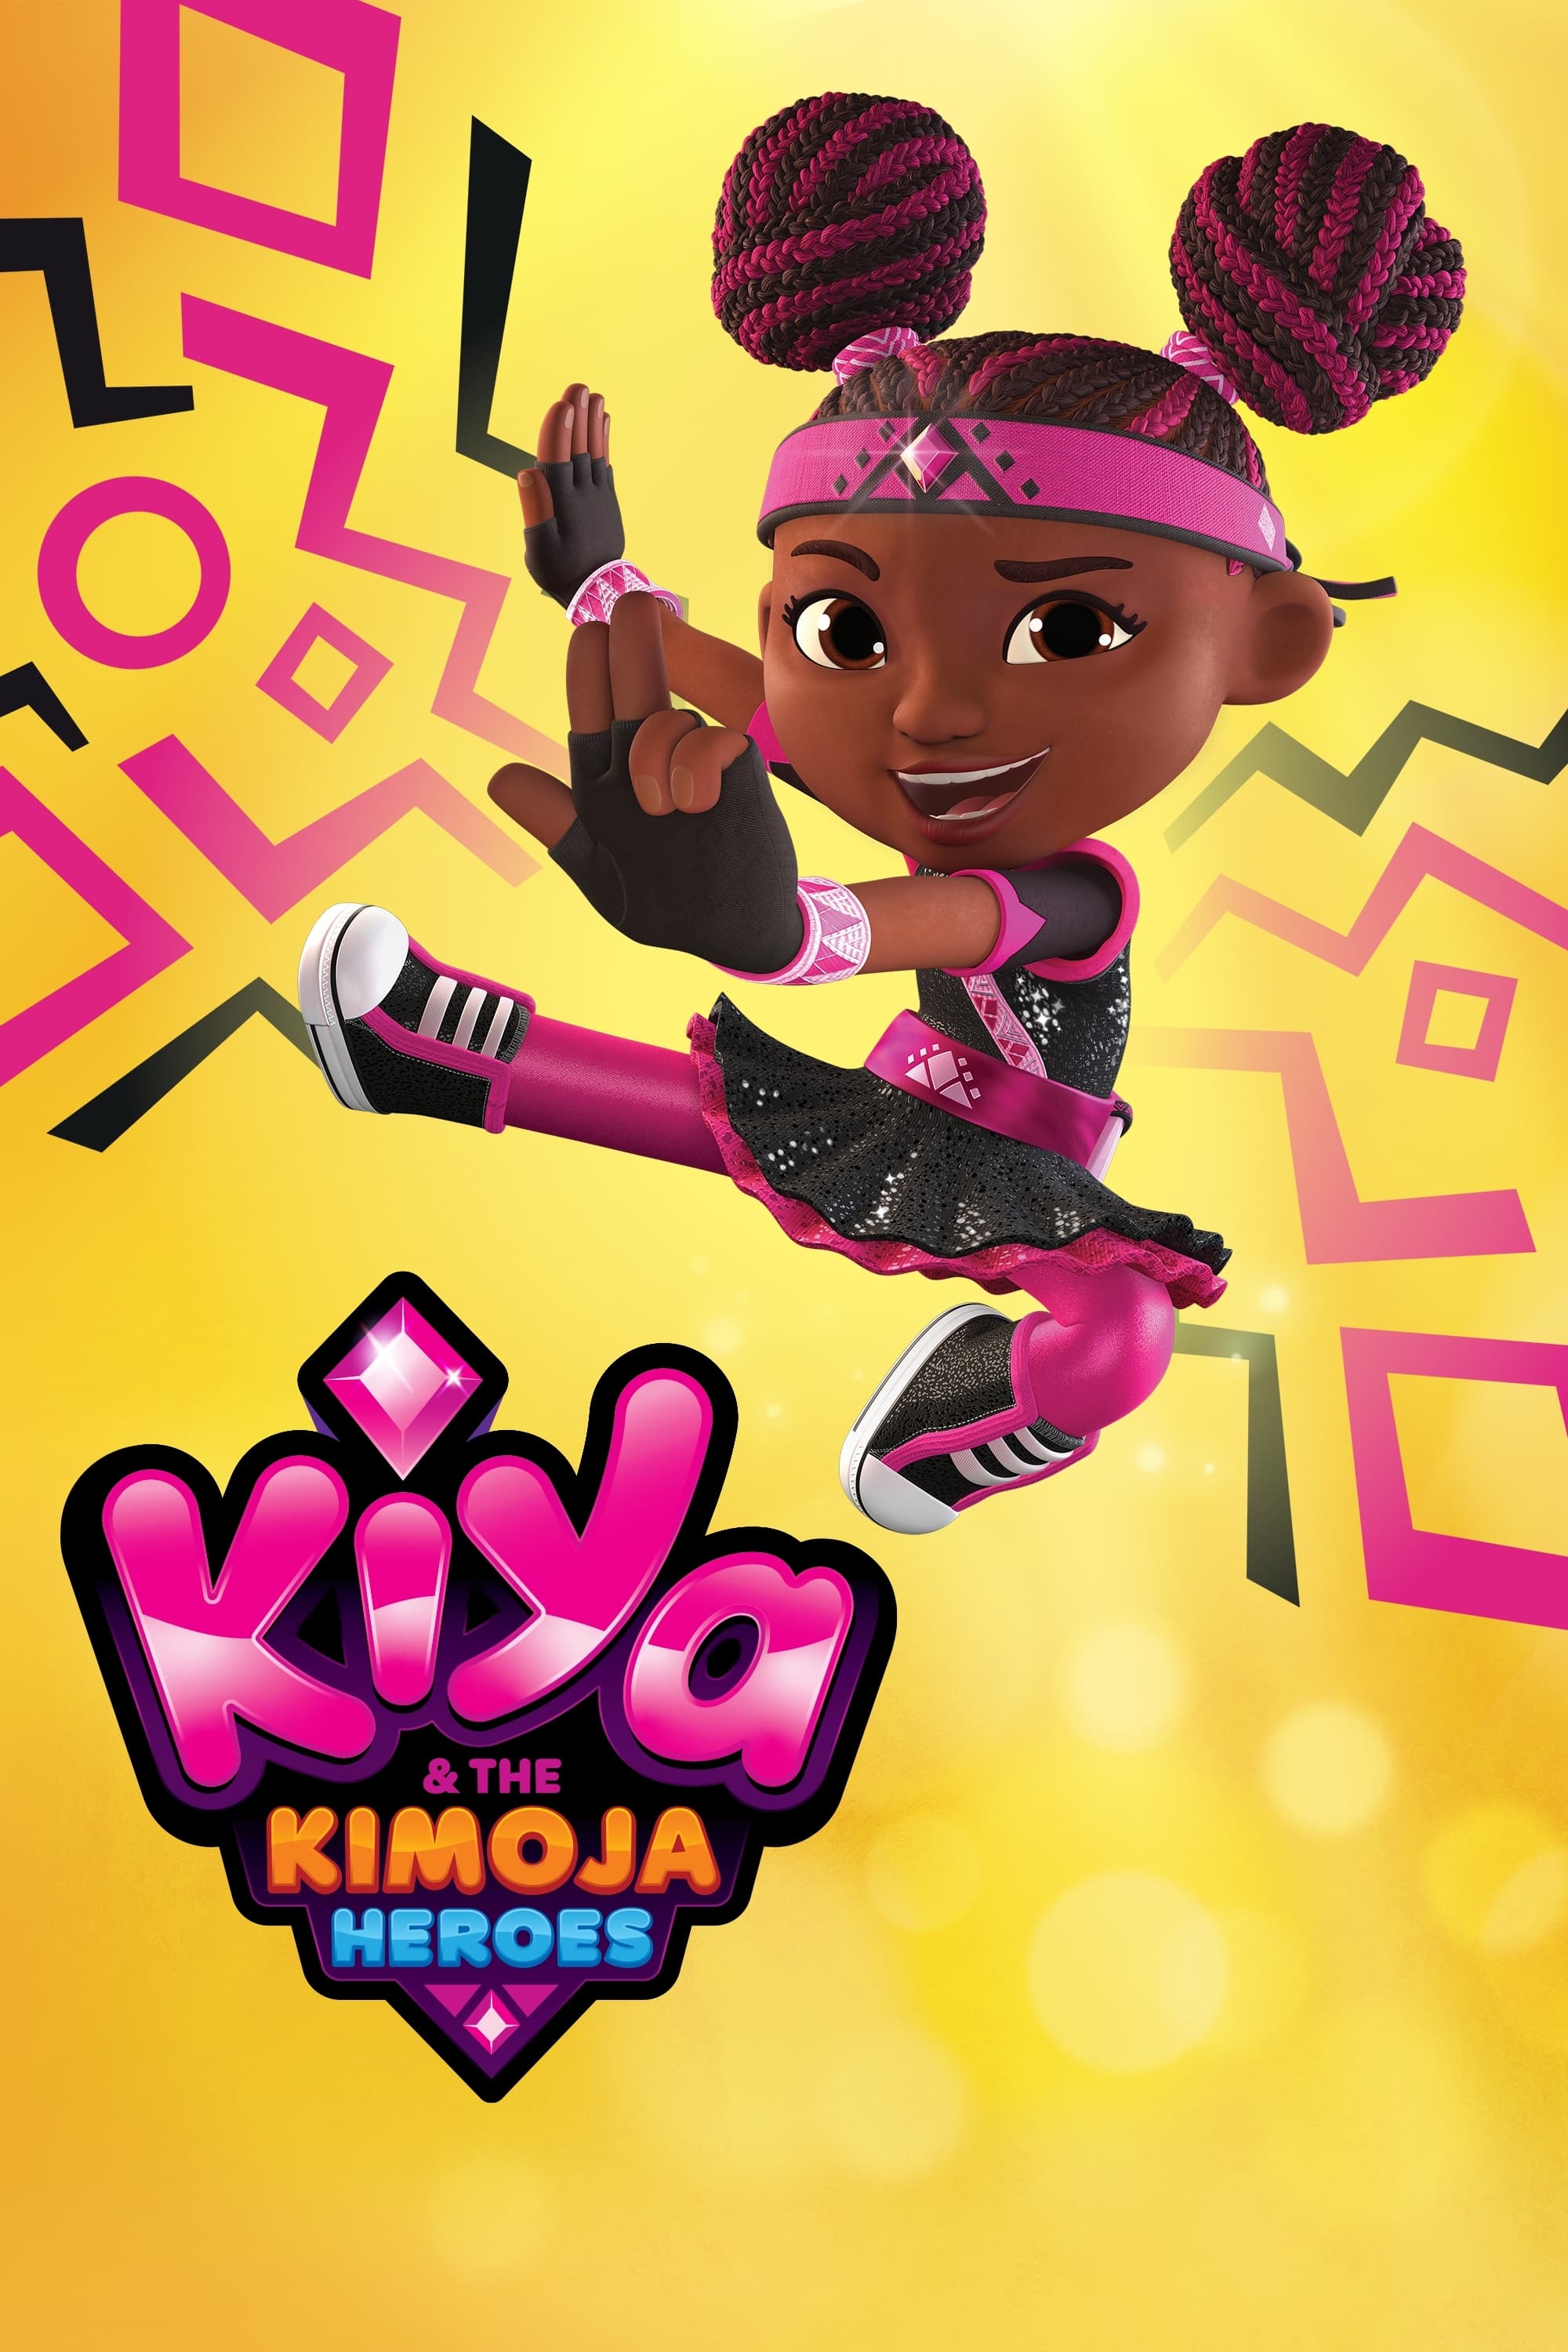 TV ratings for Kiya & The Kimoja Heroes in Portugal. Disney+ TV series